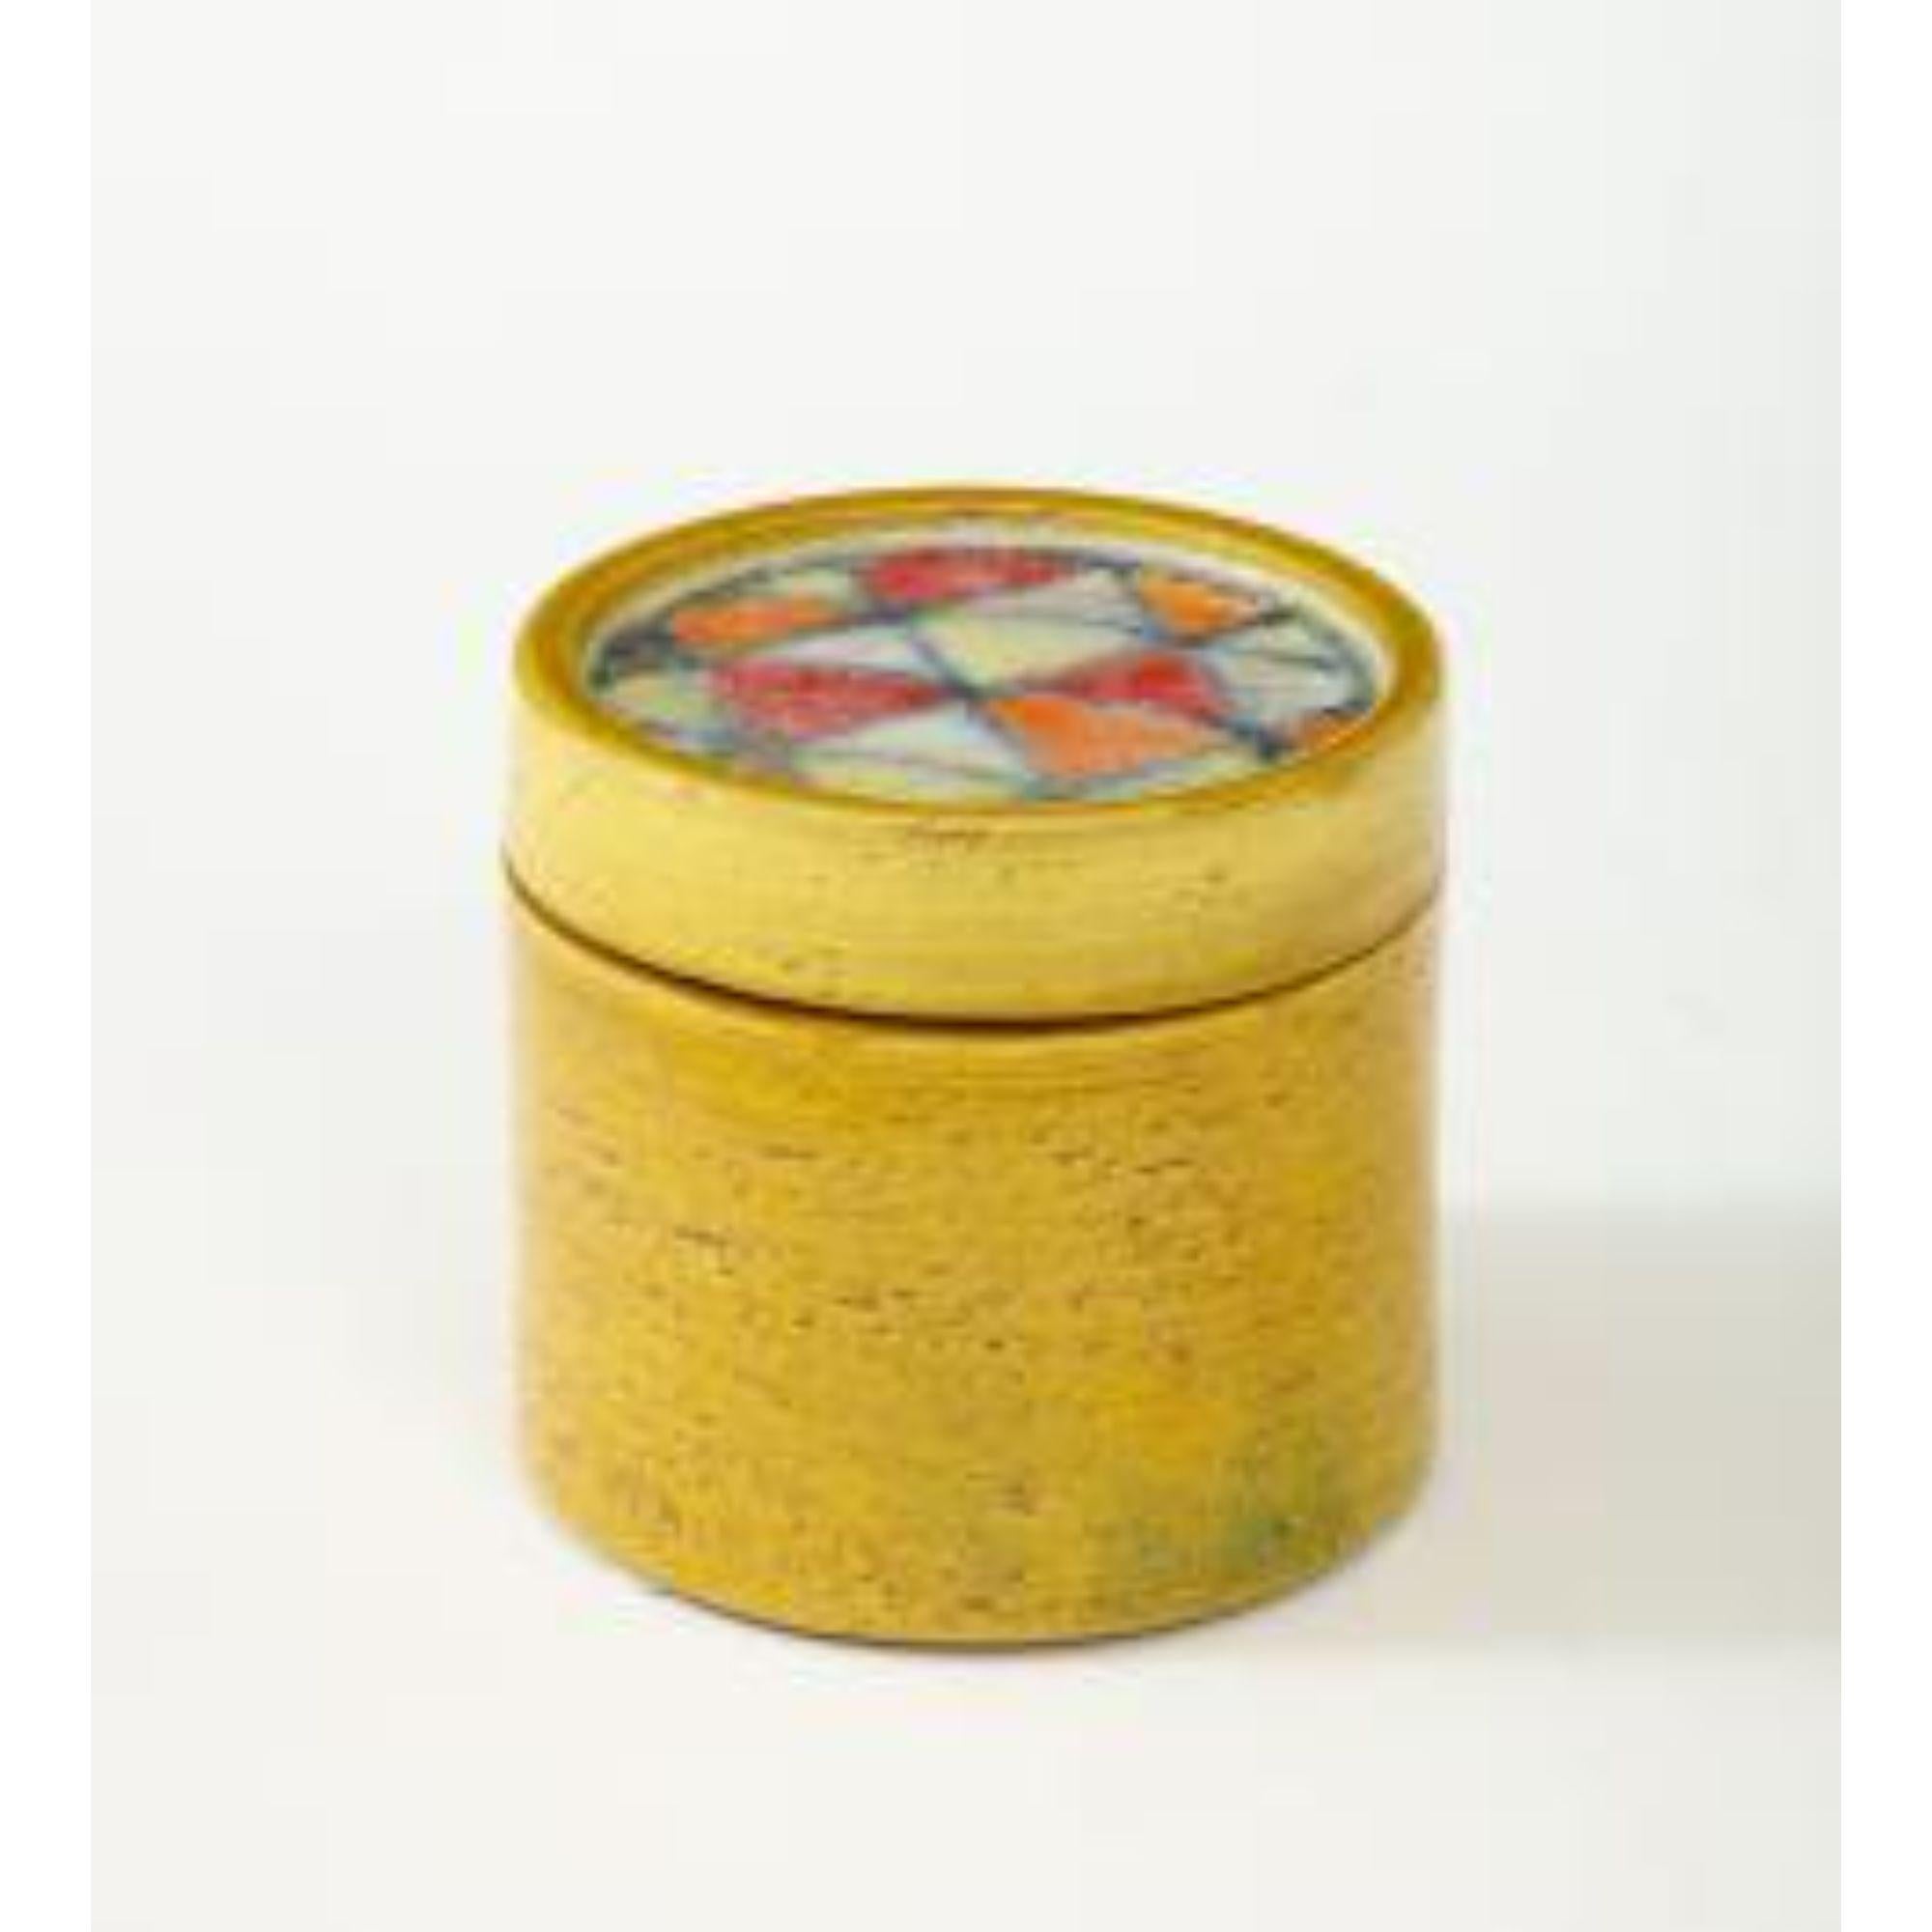 Italian Bitossi Lidded Box in Glazed Ceramic with Fused Glass Mosaic, circa 1960s For Sale